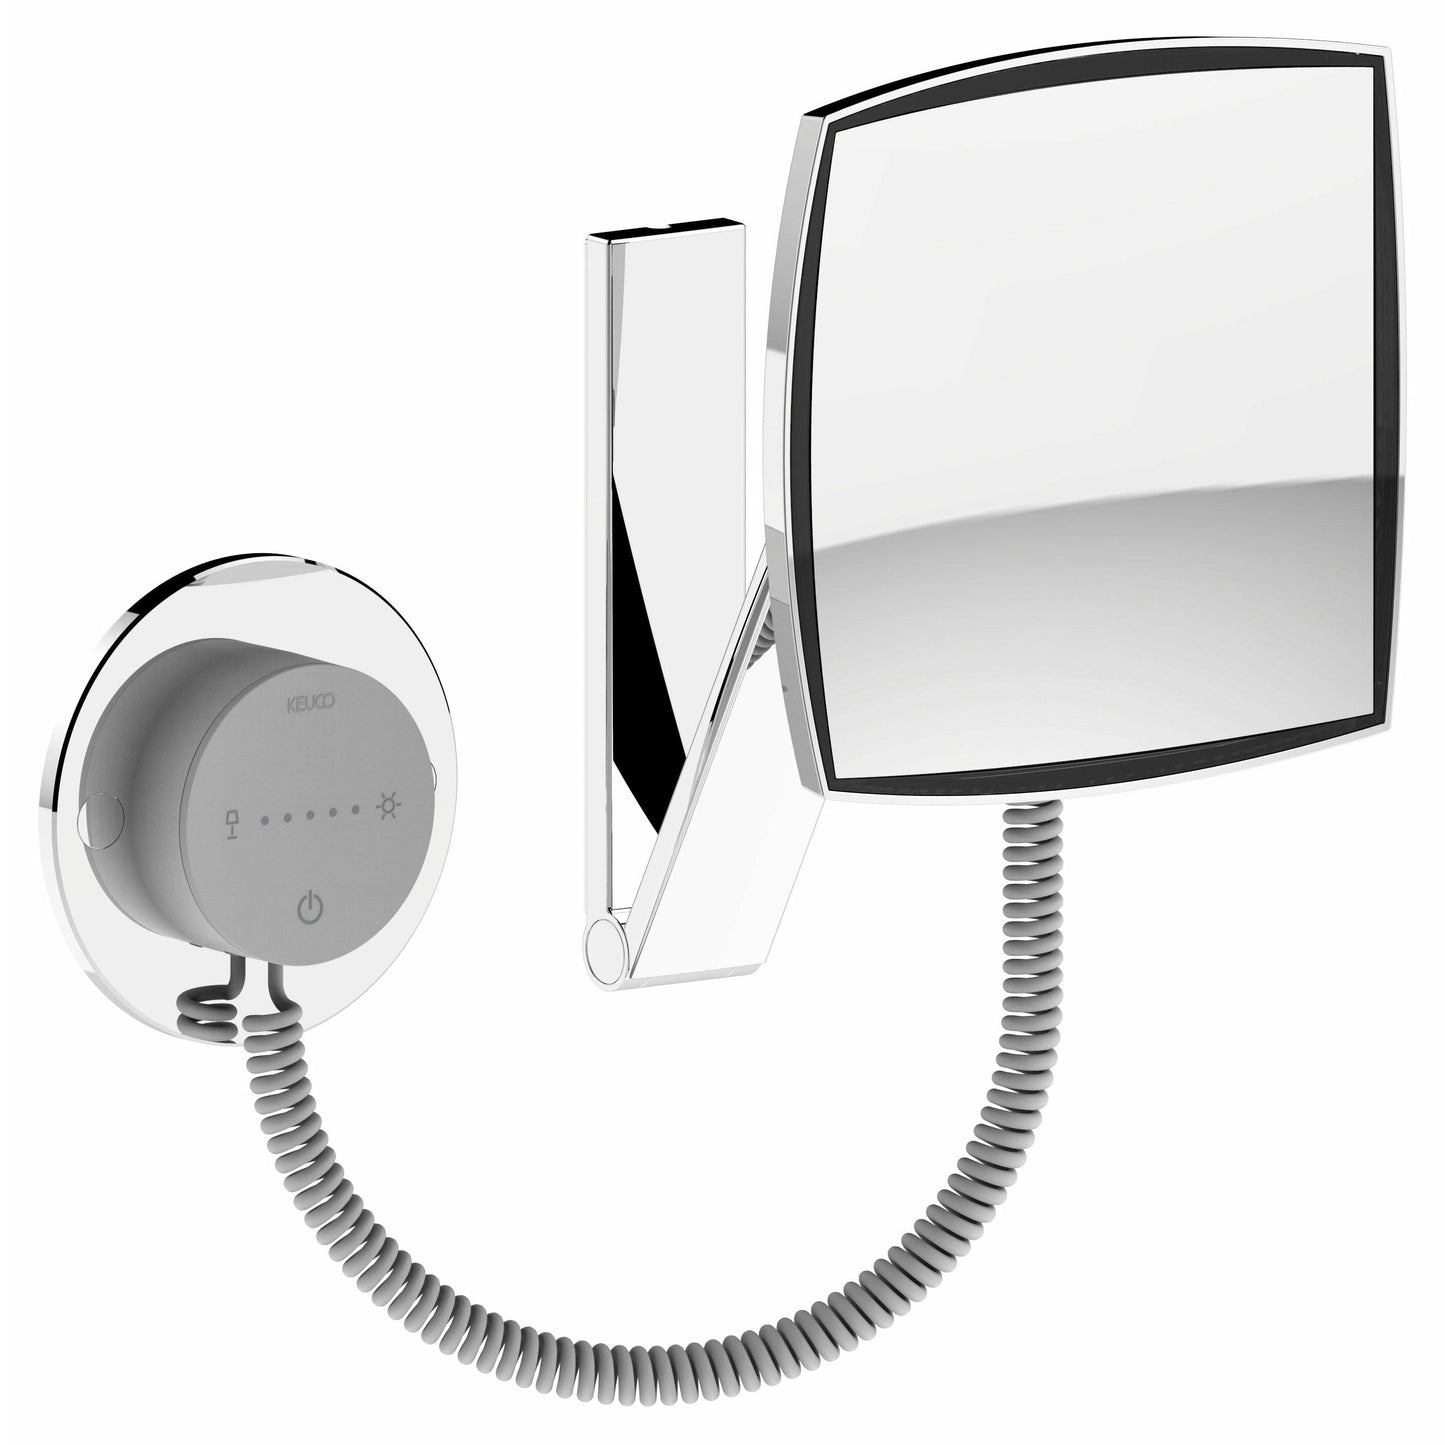 Keuco iLook_move Adjustable Light Cosmetic Mirror with External Cord - Sea & Stone Bath